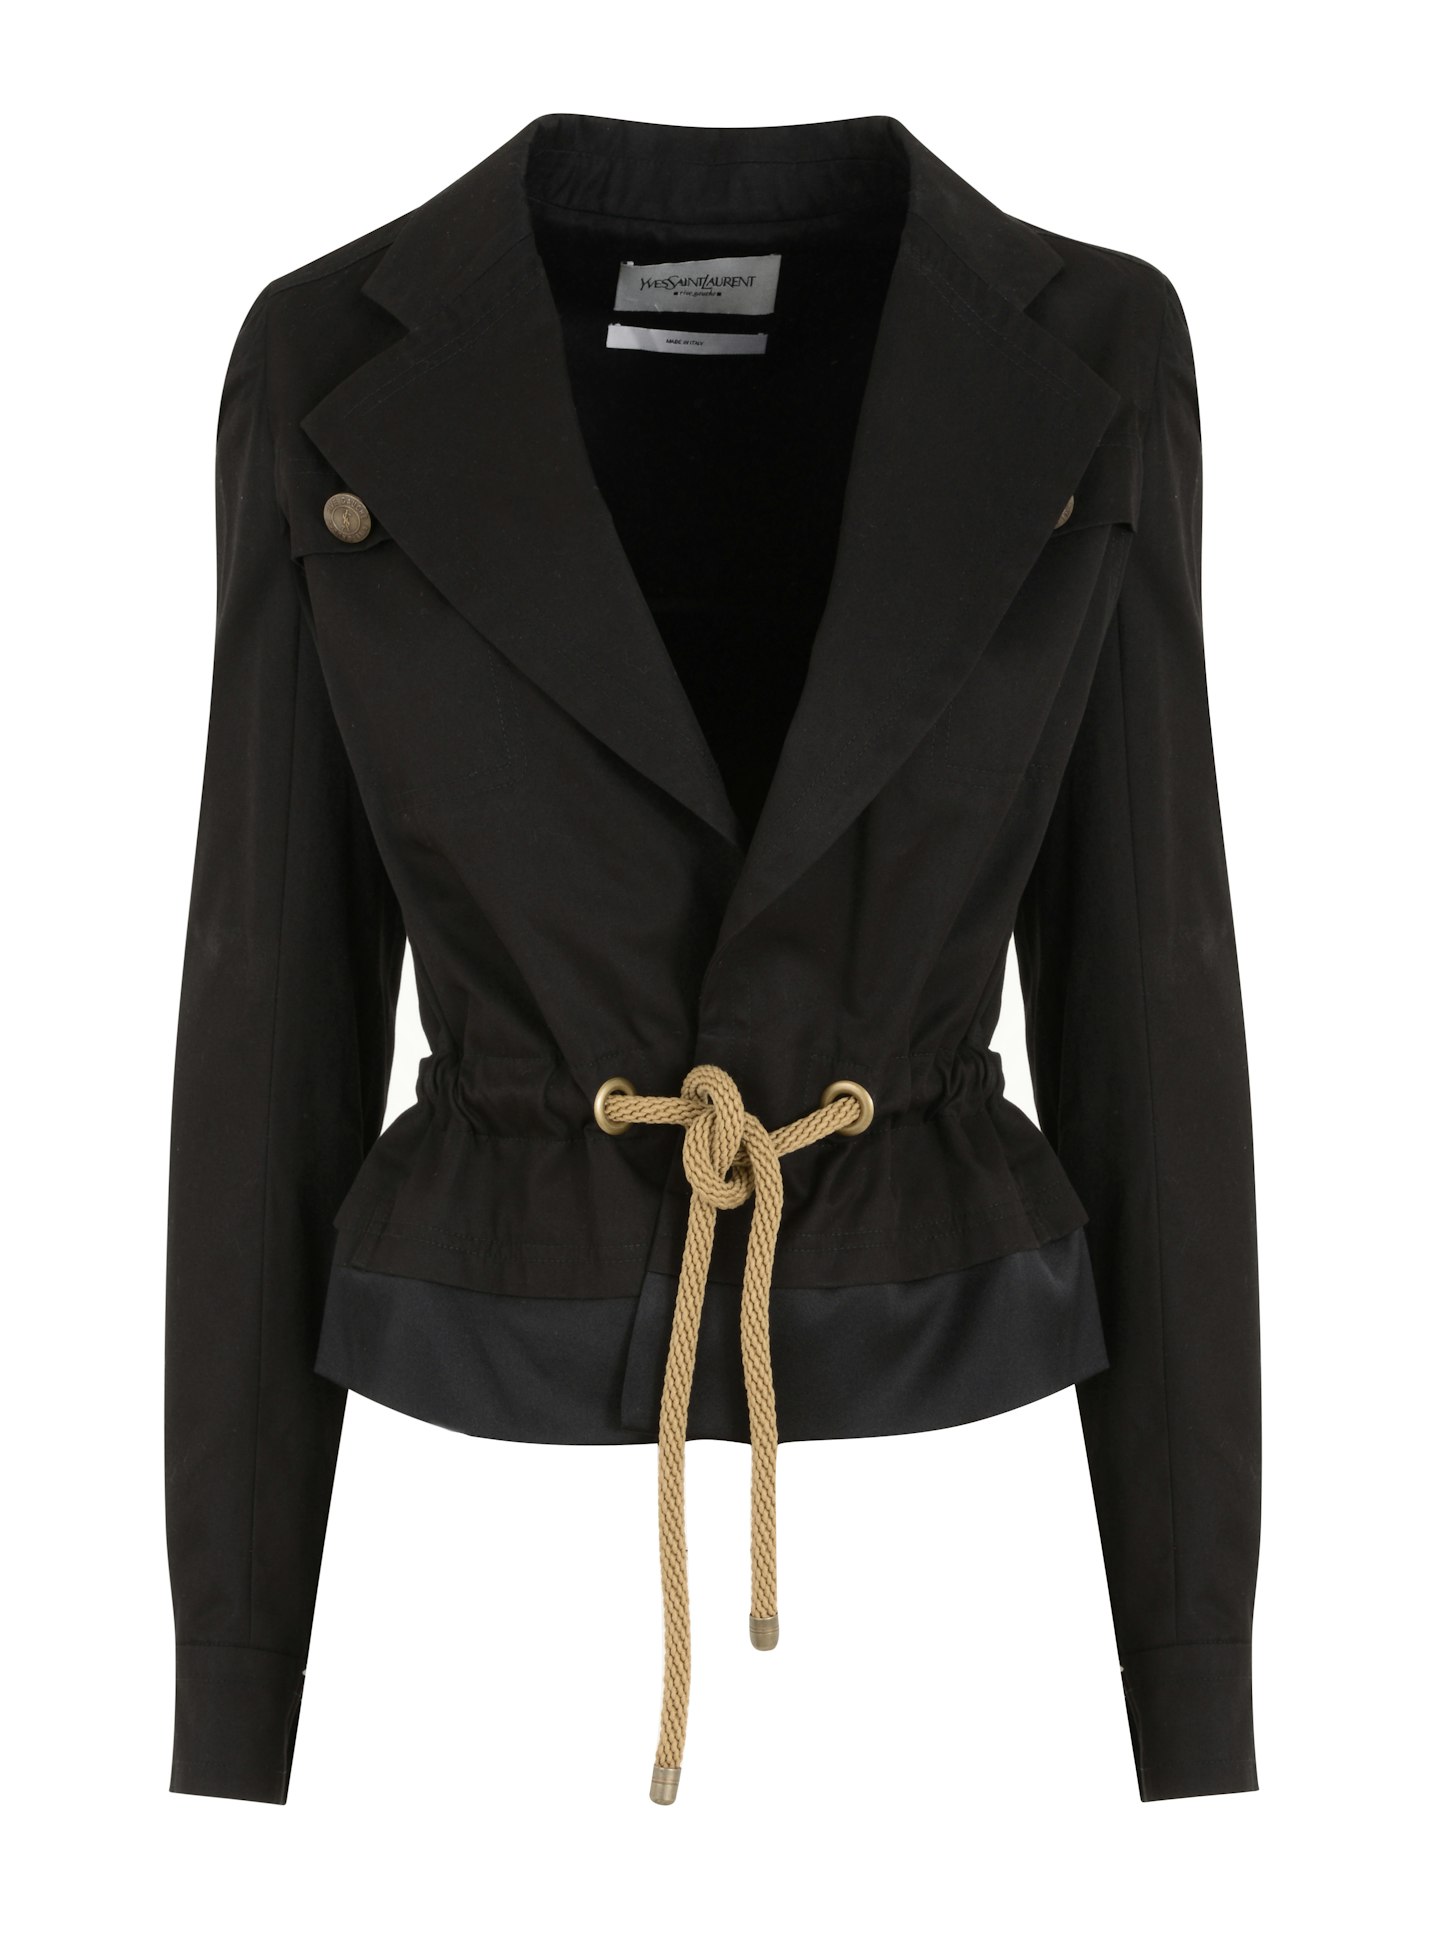 Kate Moss' YSL Jacket